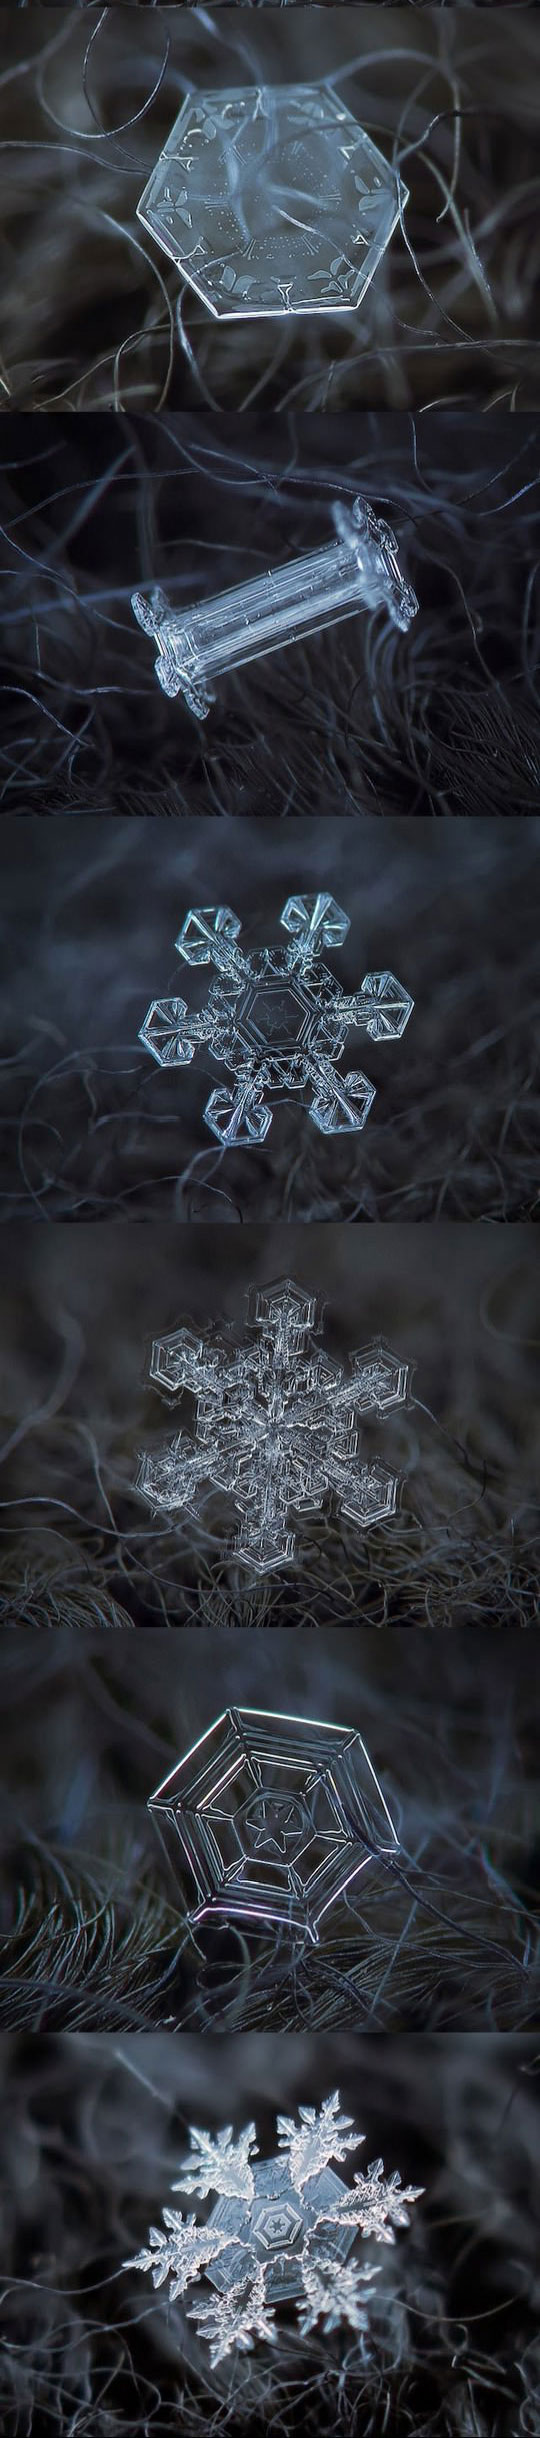 cool-snowflake-micro-photography